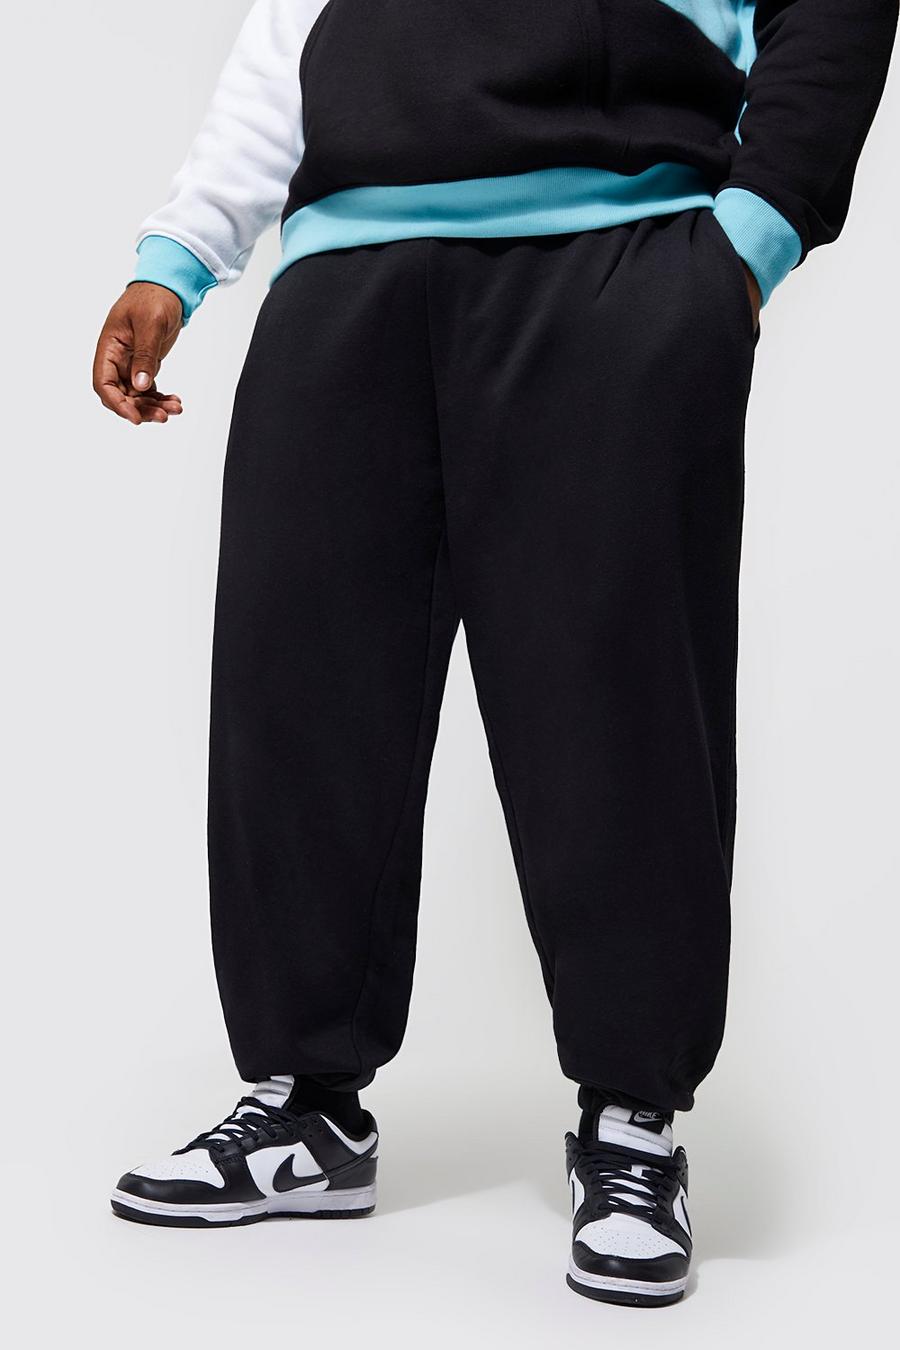 Pantalón deportivo Plus básico holgado con algodón ecológico, Black negro